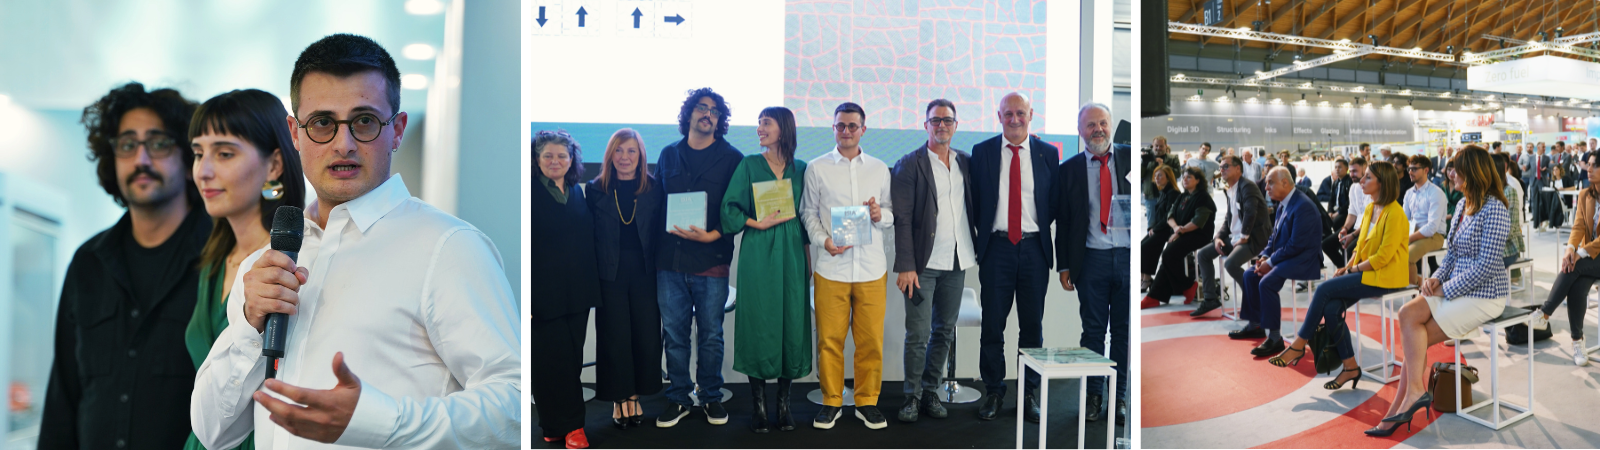 SACMI-ISIA, winners of ArtTooling project awarded at Tecna